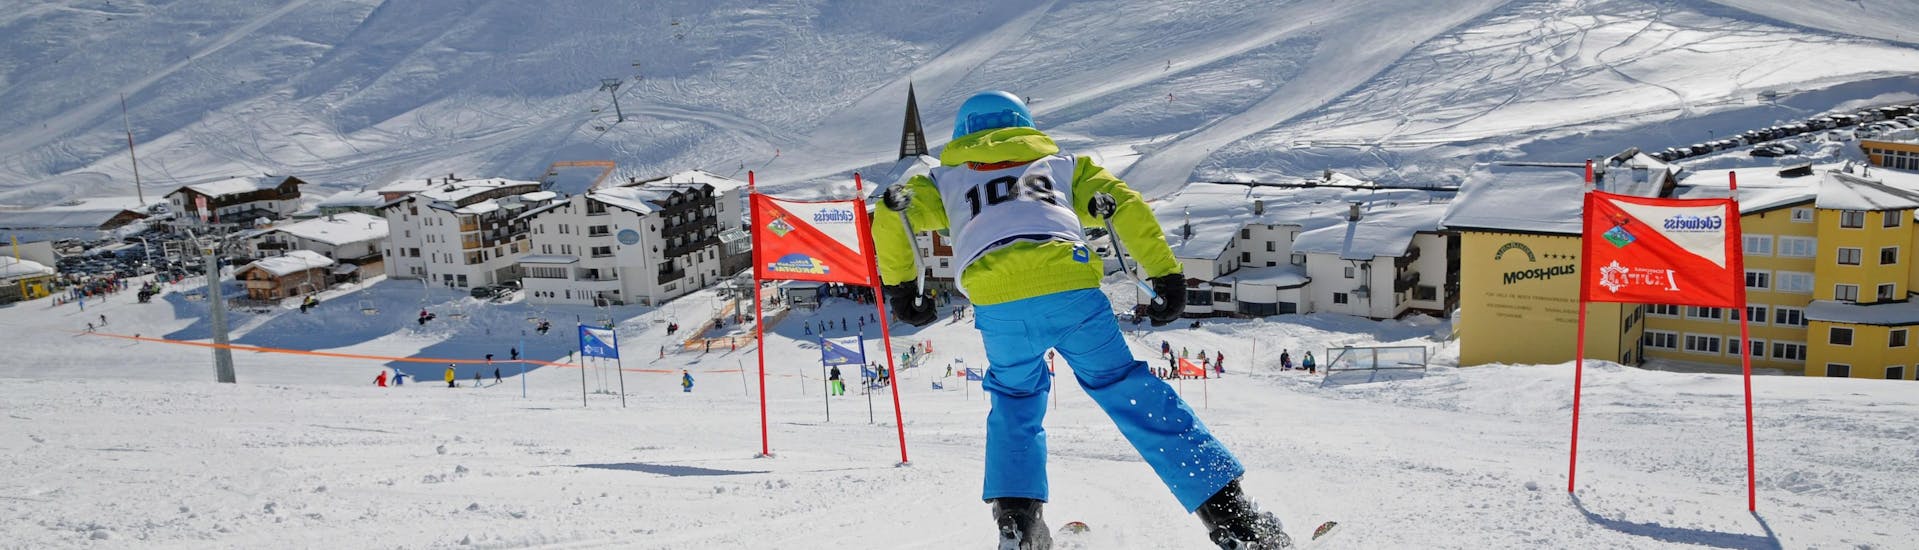 Kids Ski Lessons (5-14 y.) for Advanced Skiers.